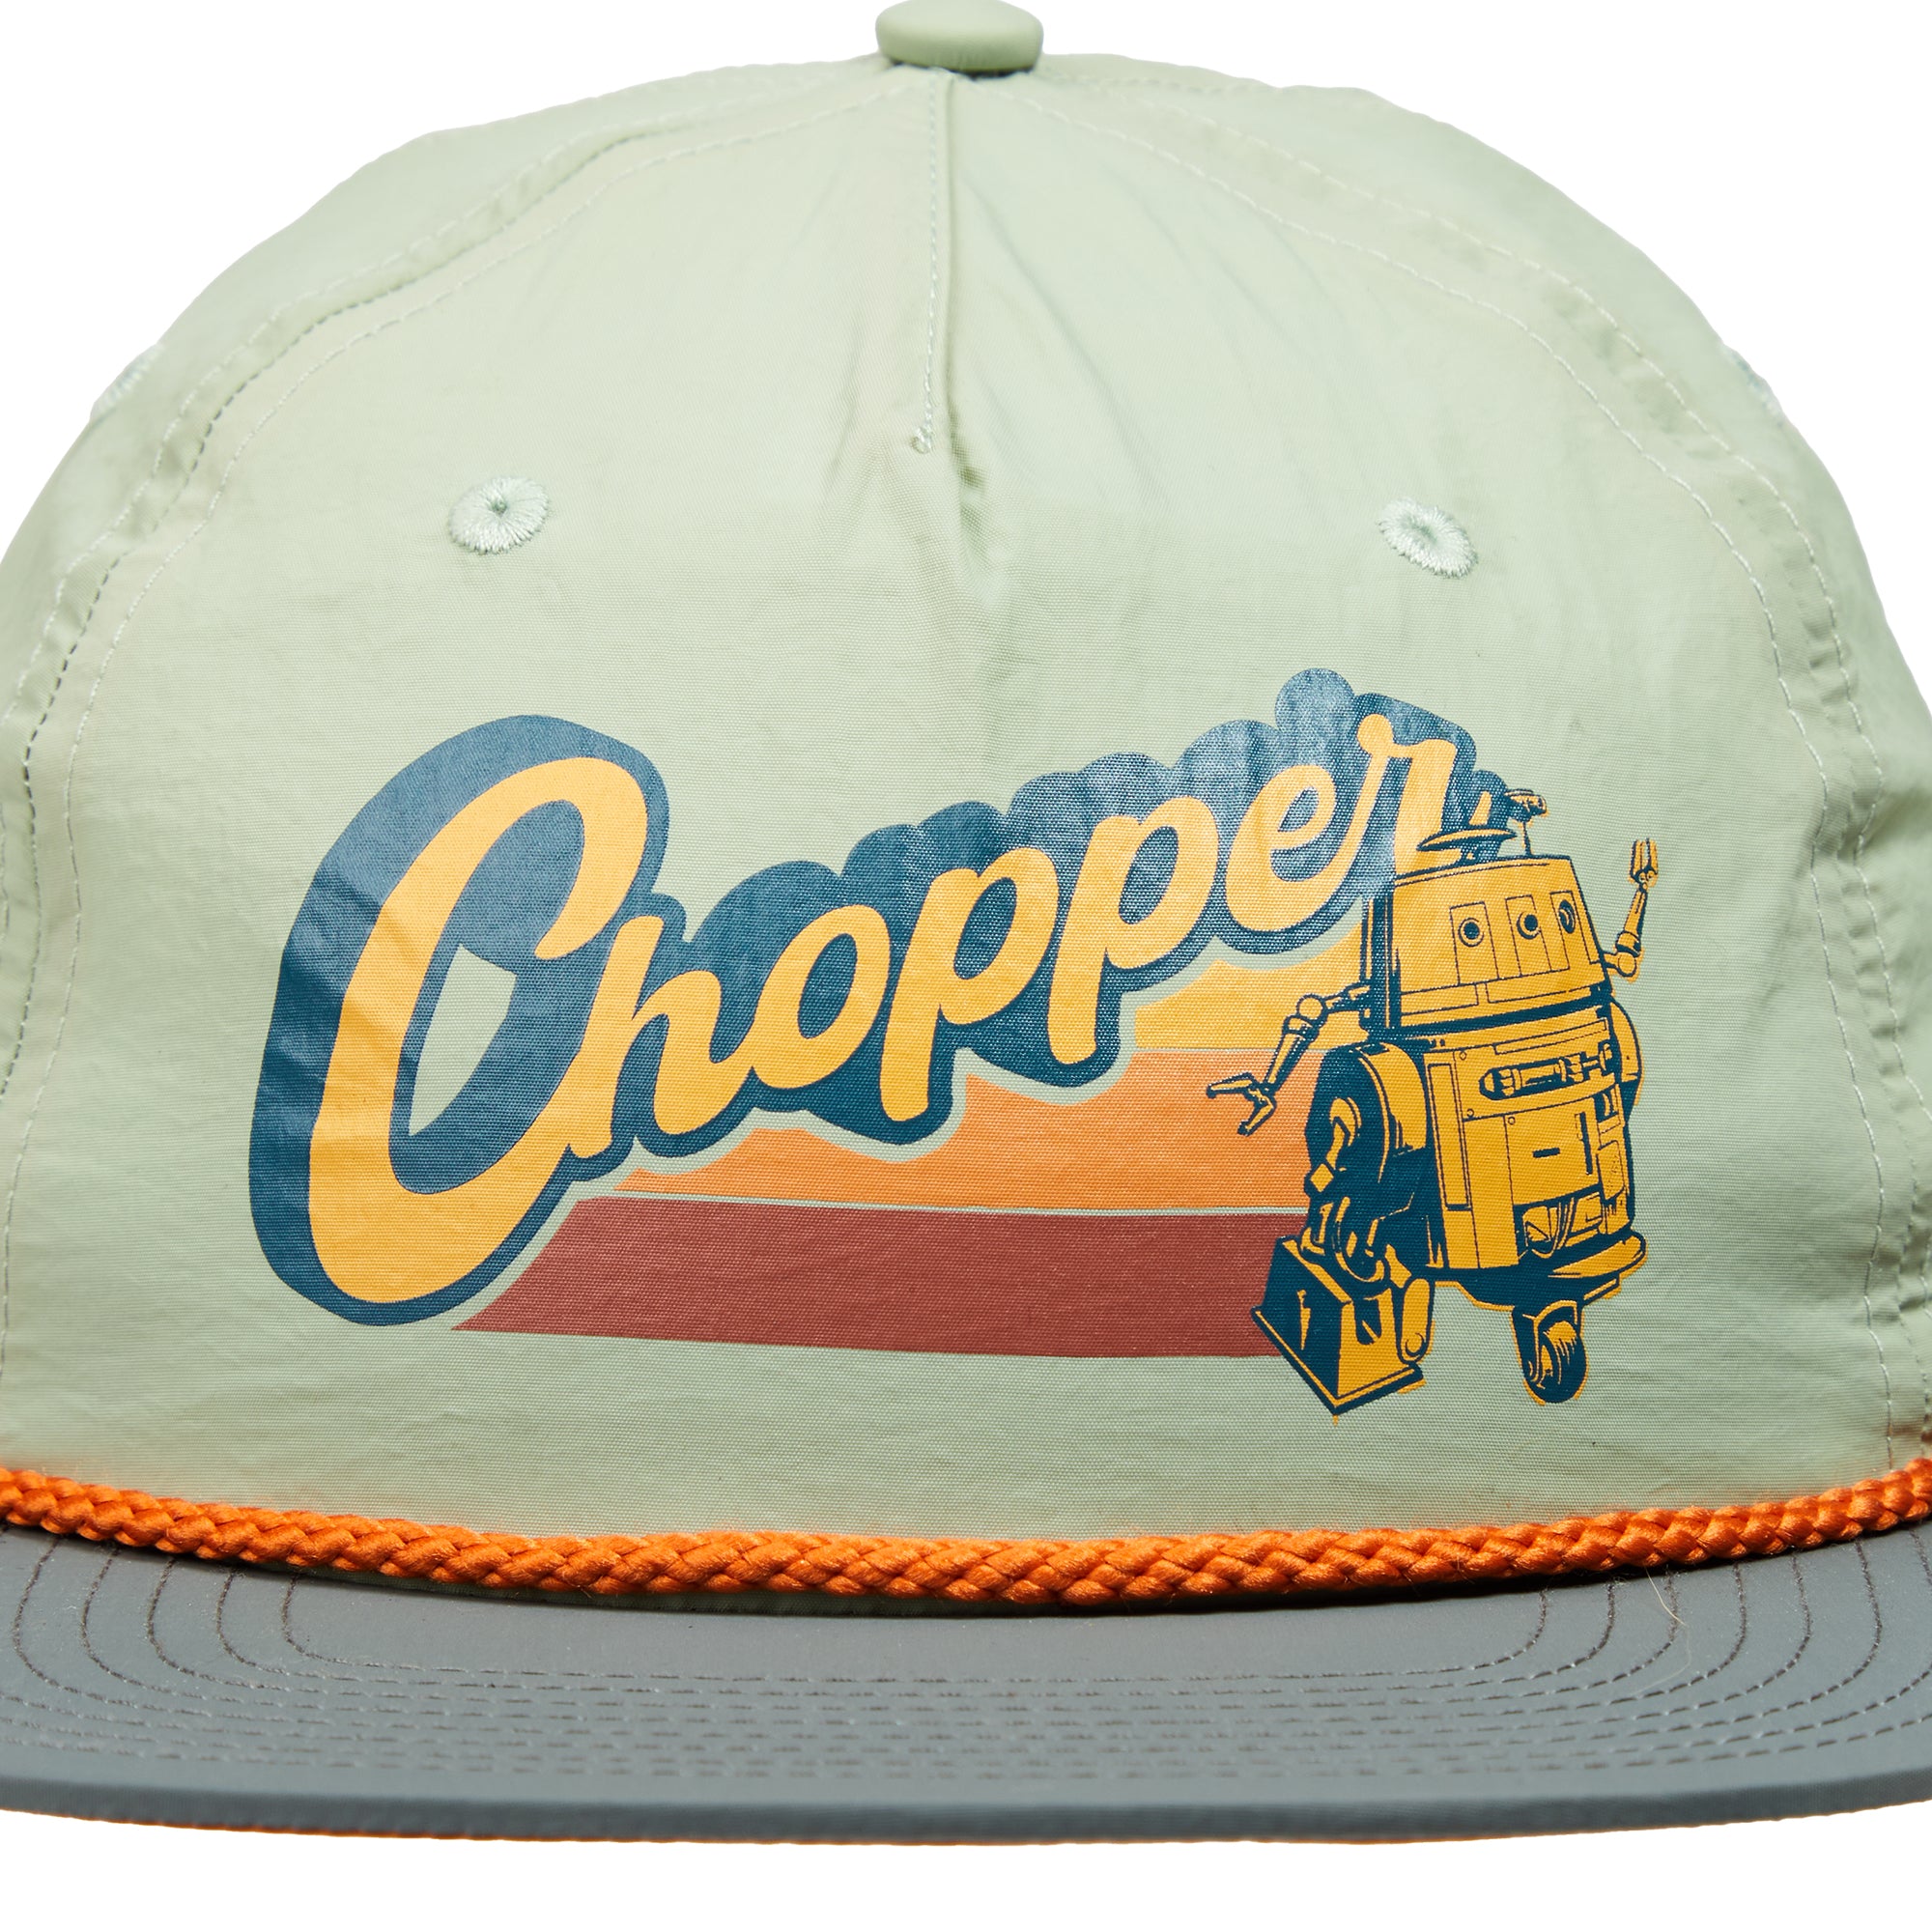 Chopper Retro Snapback Hat